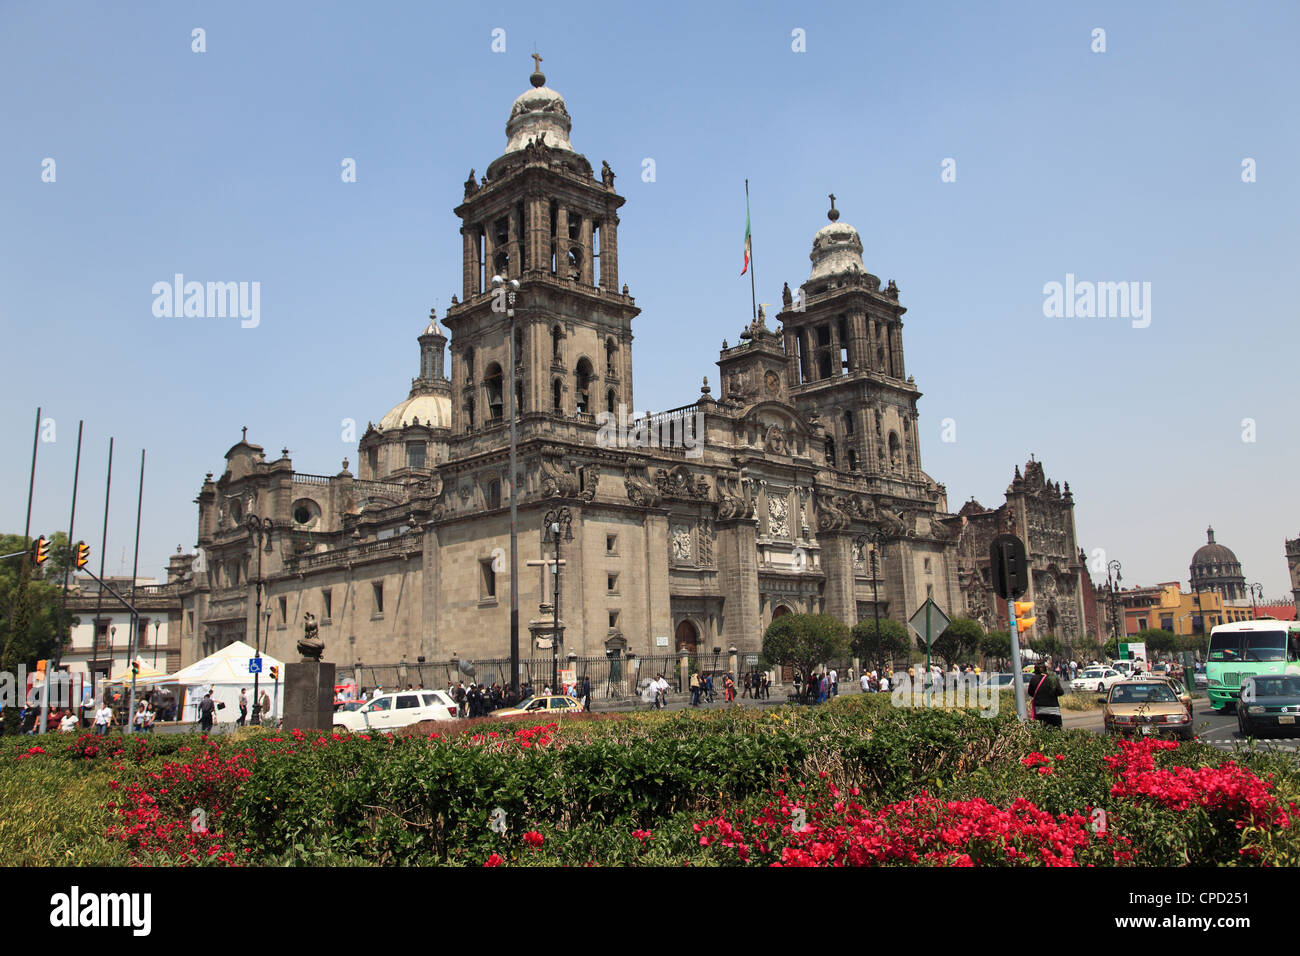 Metropolitan-Kathedrale, die größte Kirche in Lateinamerika, Zocalo, Plaza De La Constitución, Mexico City, Mexiko Stockfoto